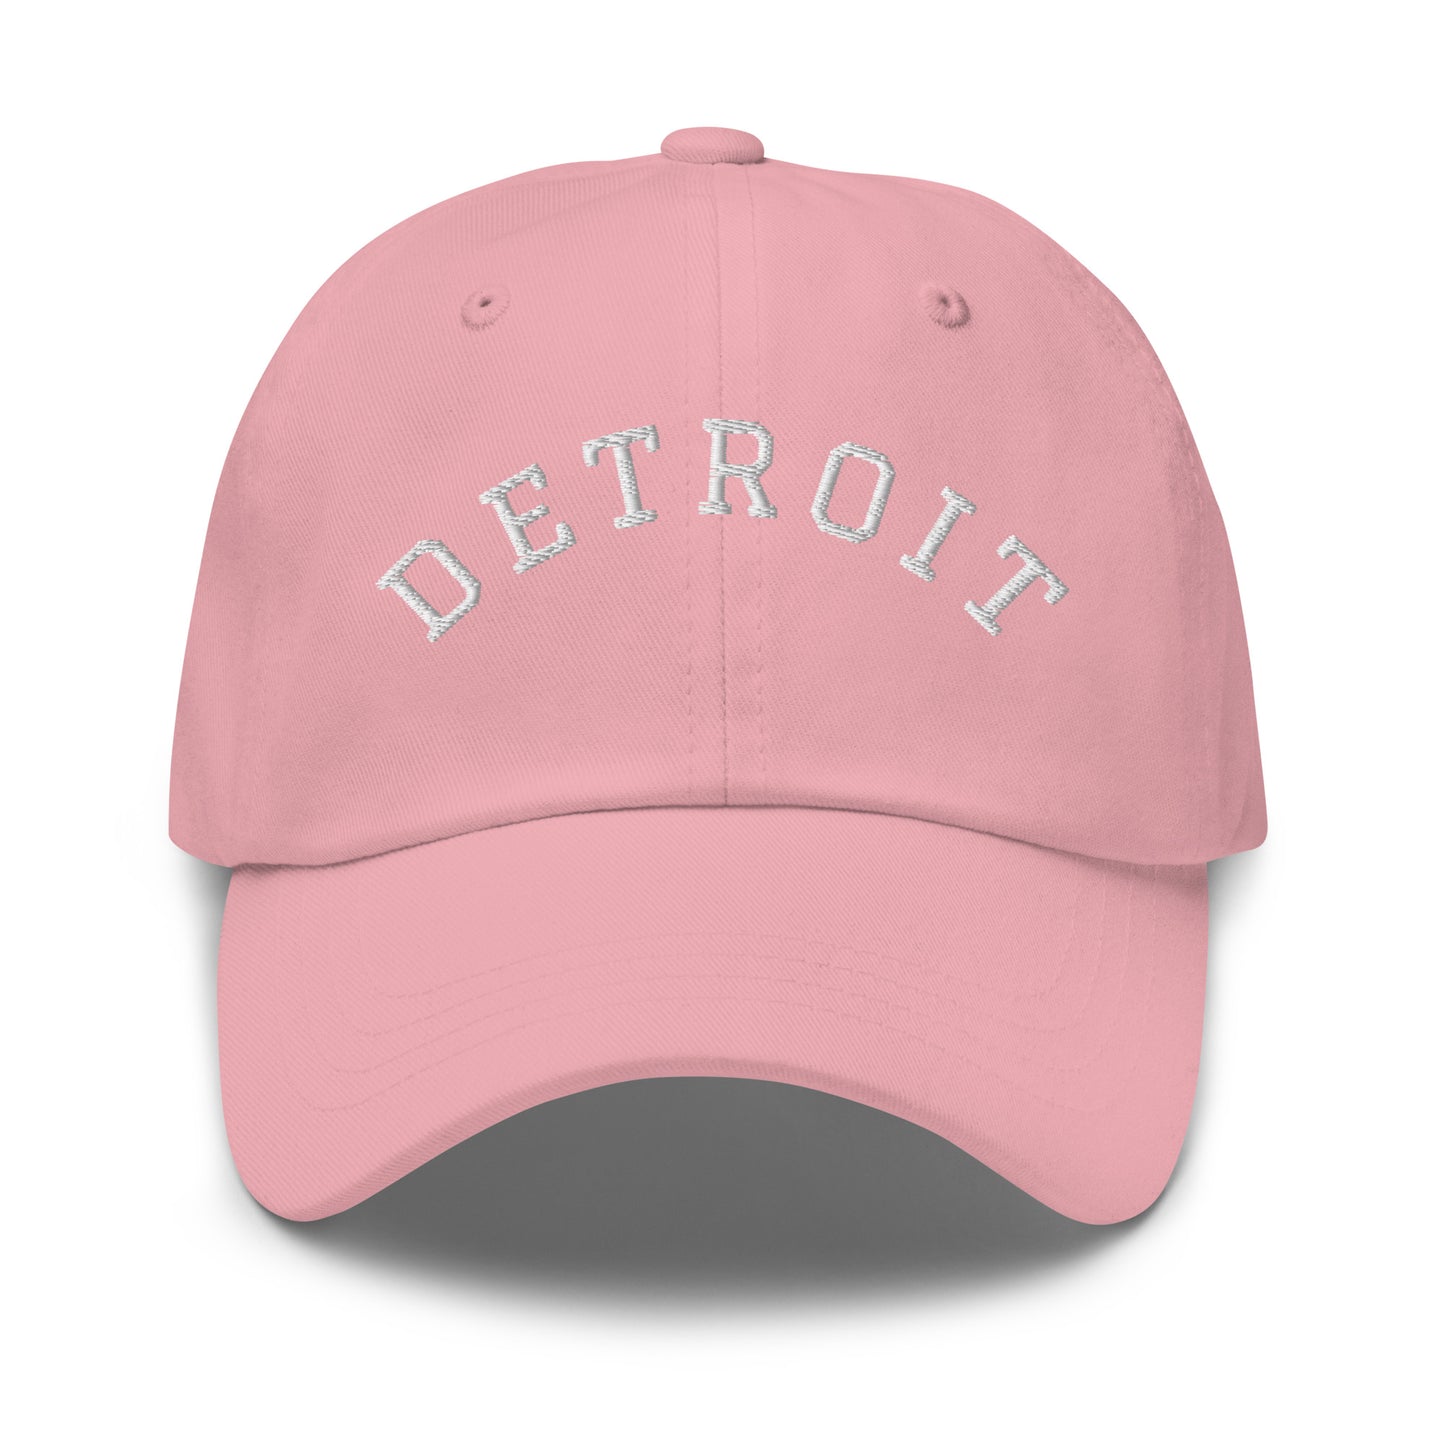 Detroit Arch Dad Hat